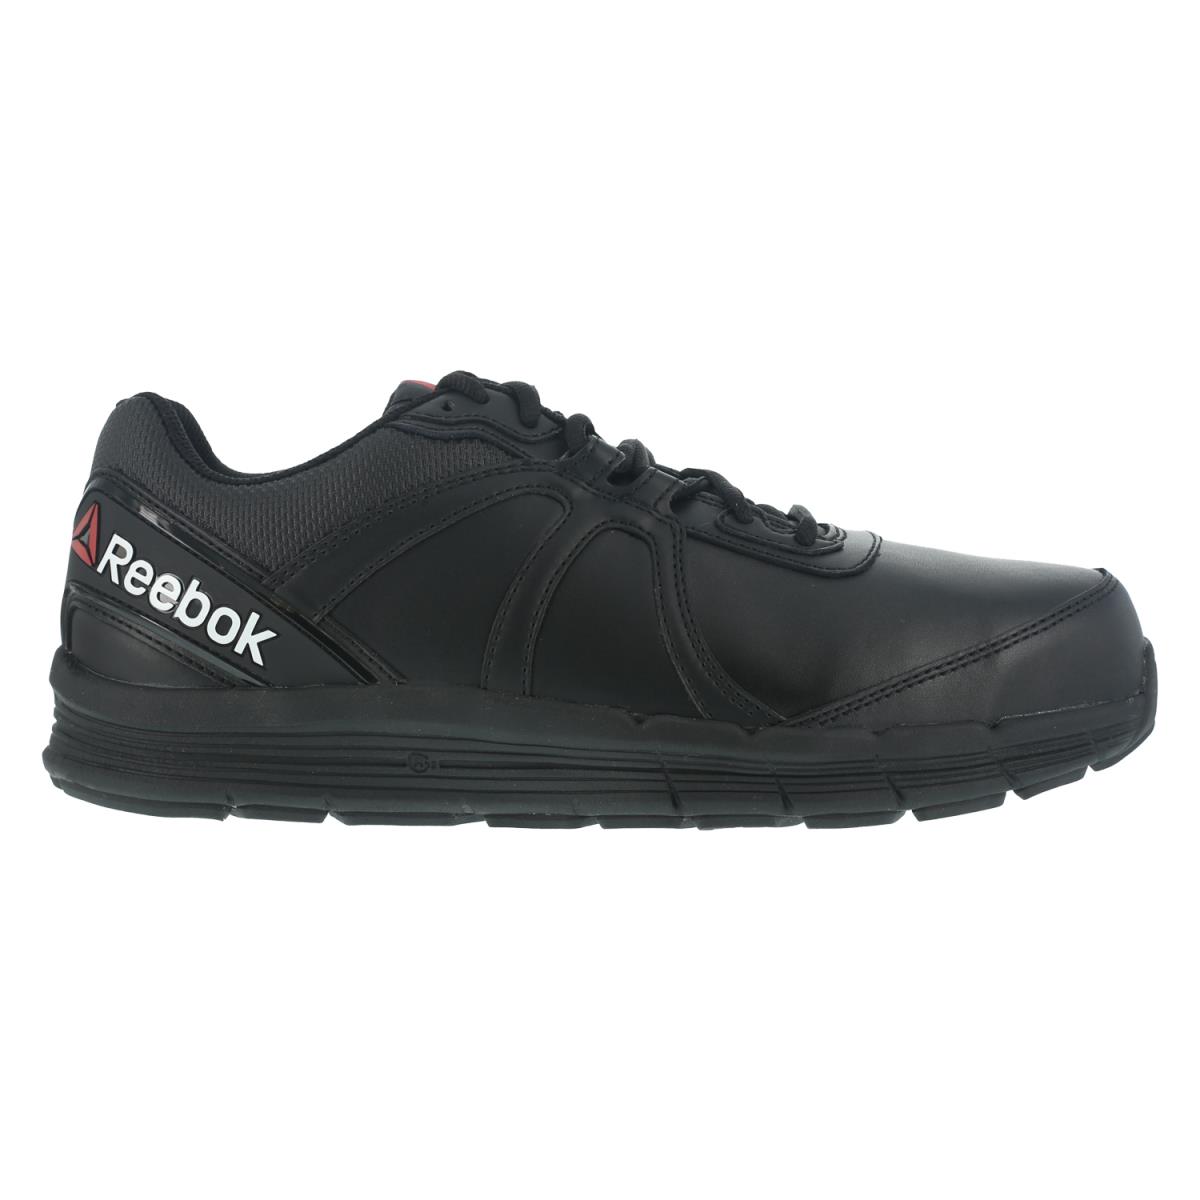 Reebok Mens Black Leather Work Shoes Cross Trainer ST M